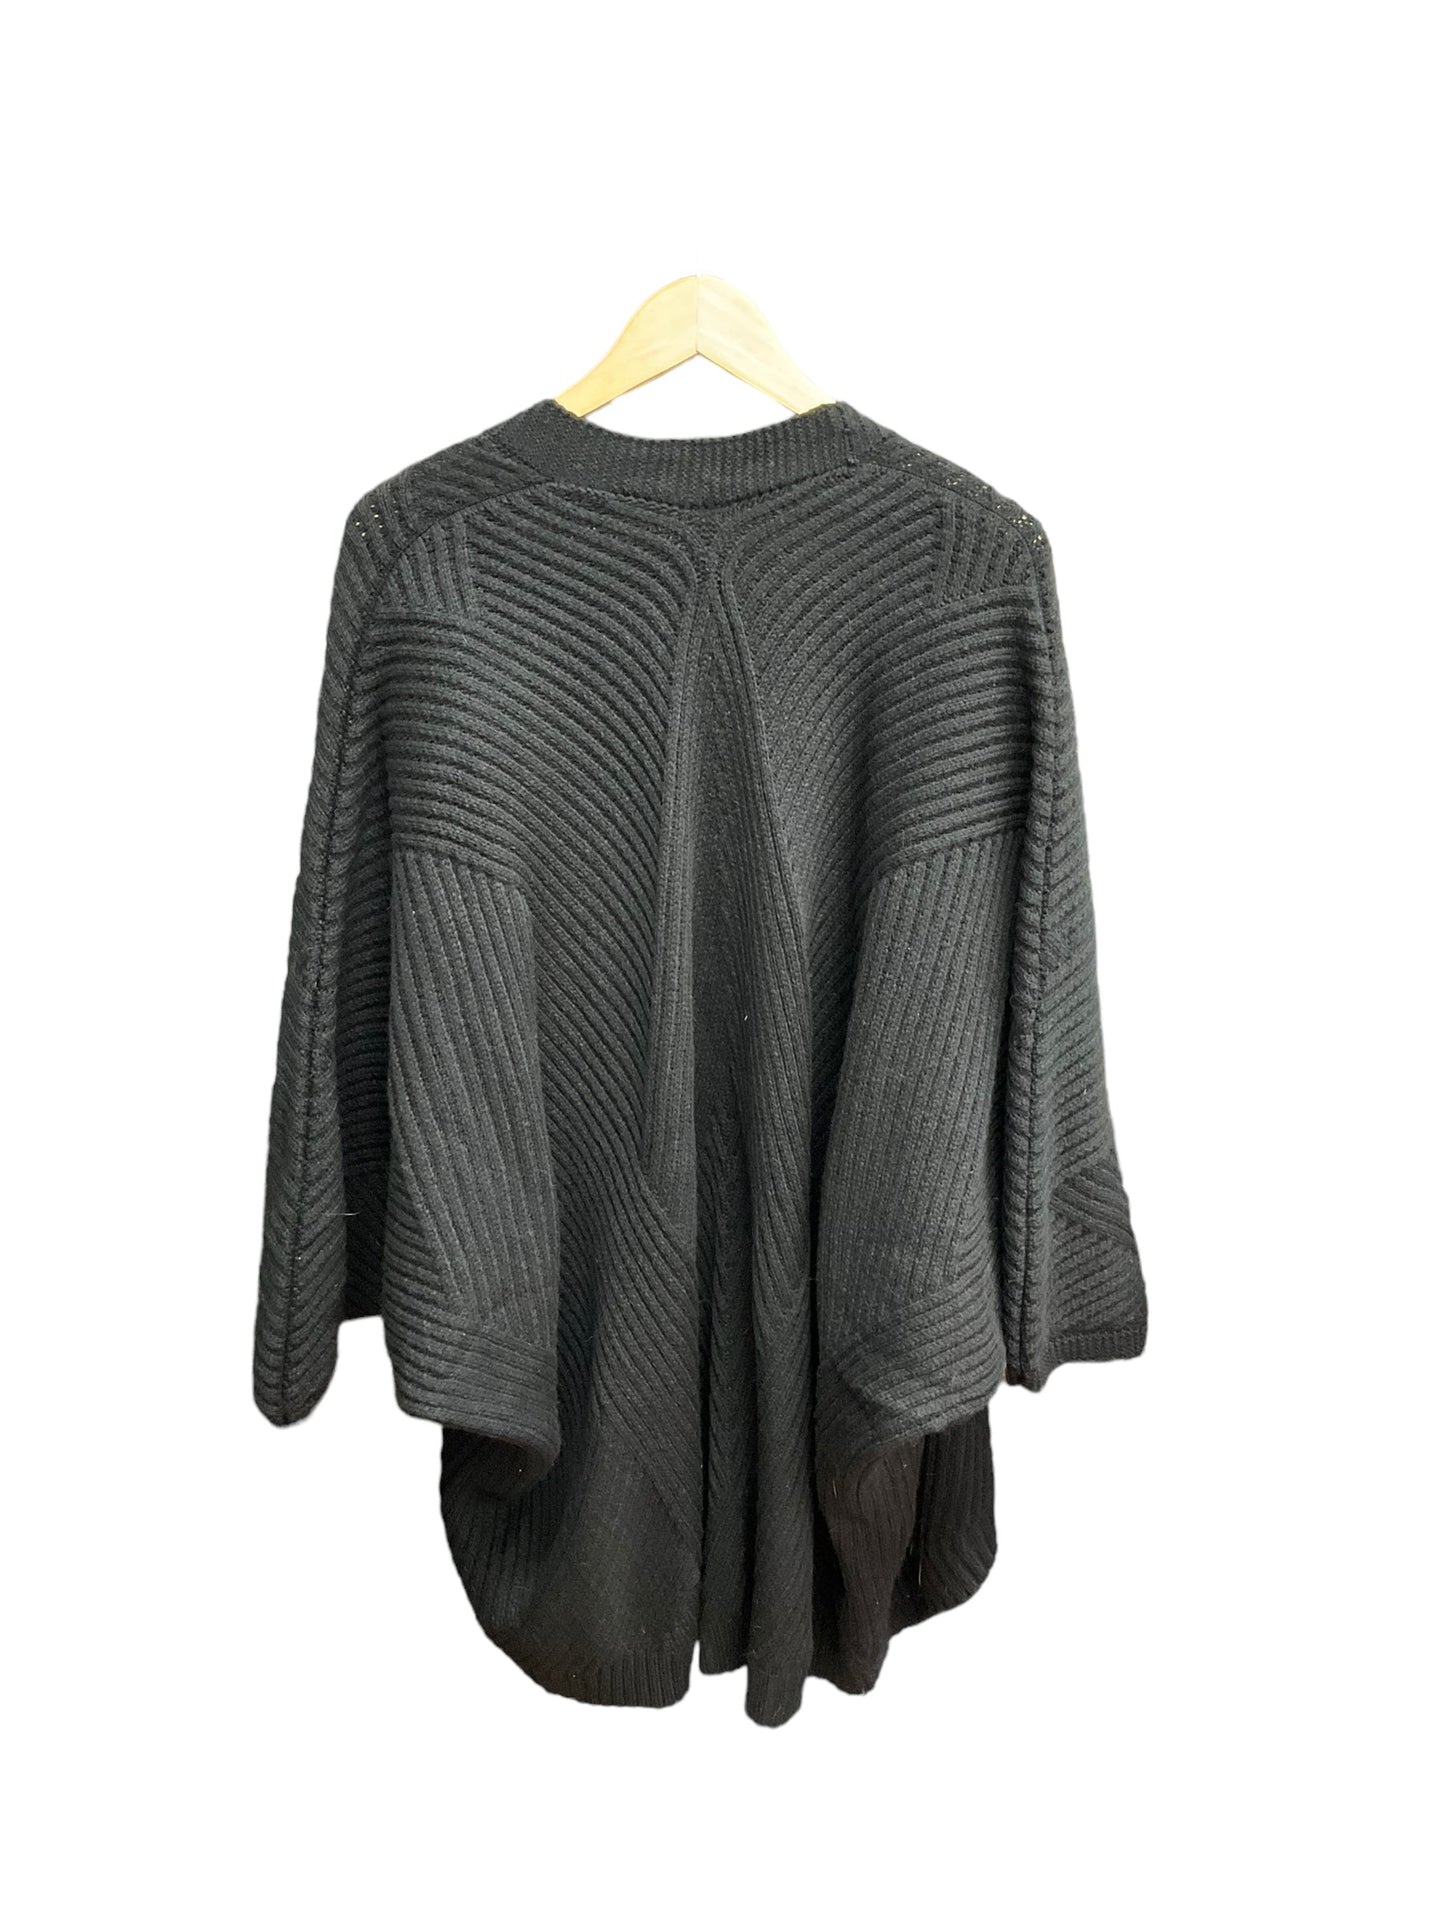 Black Sweater Cardigan Torrid, Size 1x